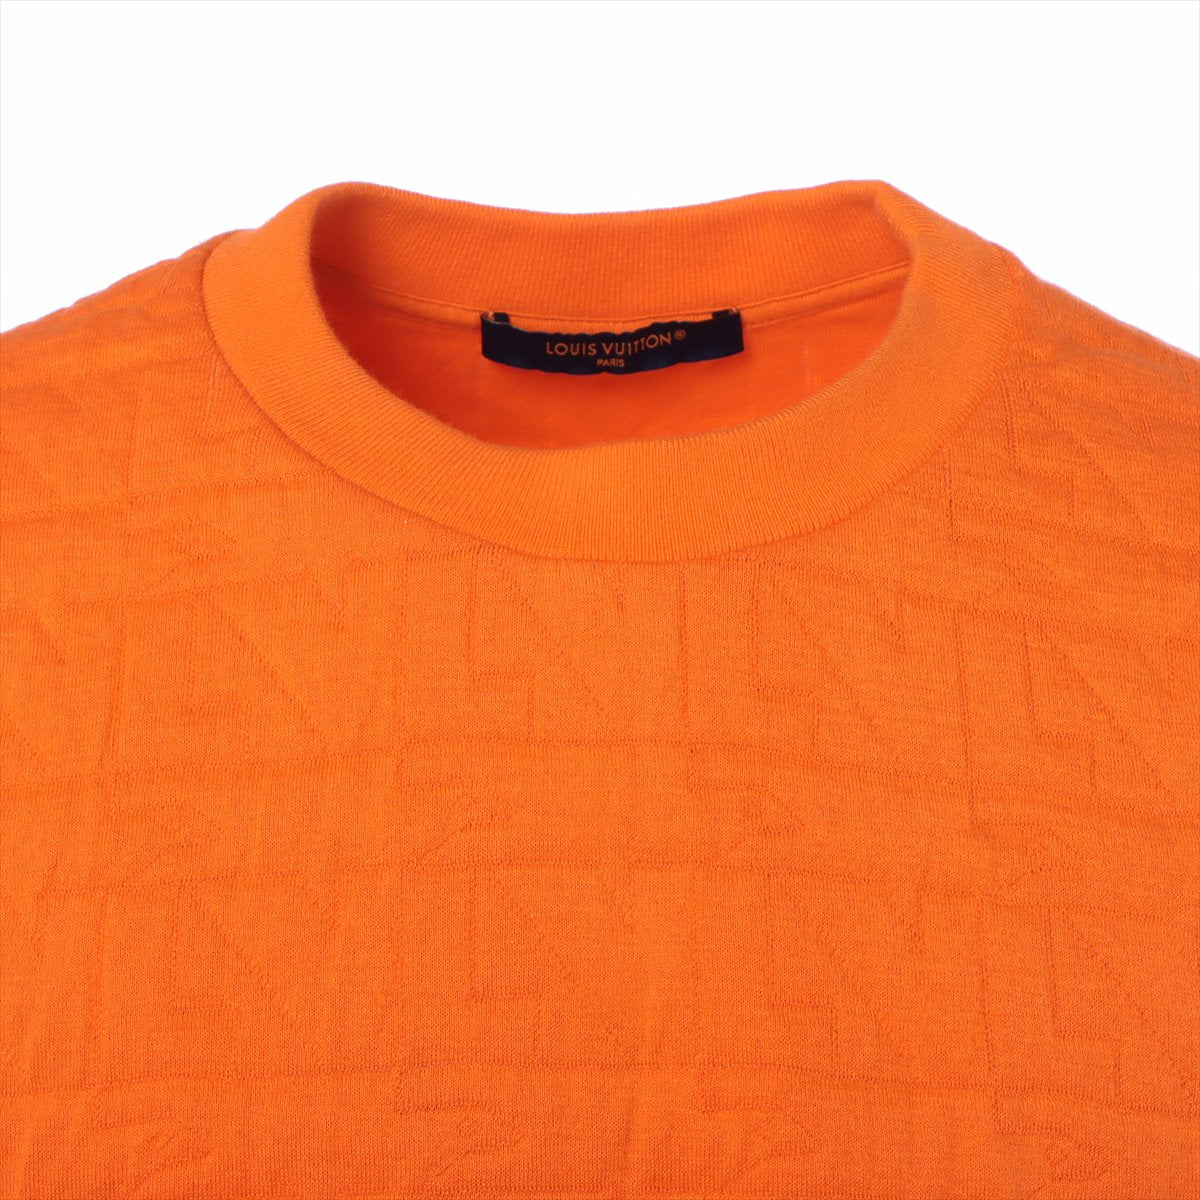 Louis Vuitton 23SS Cotton & nylon Basic knitted fabric L Men's Orange  RM231M LV stitching